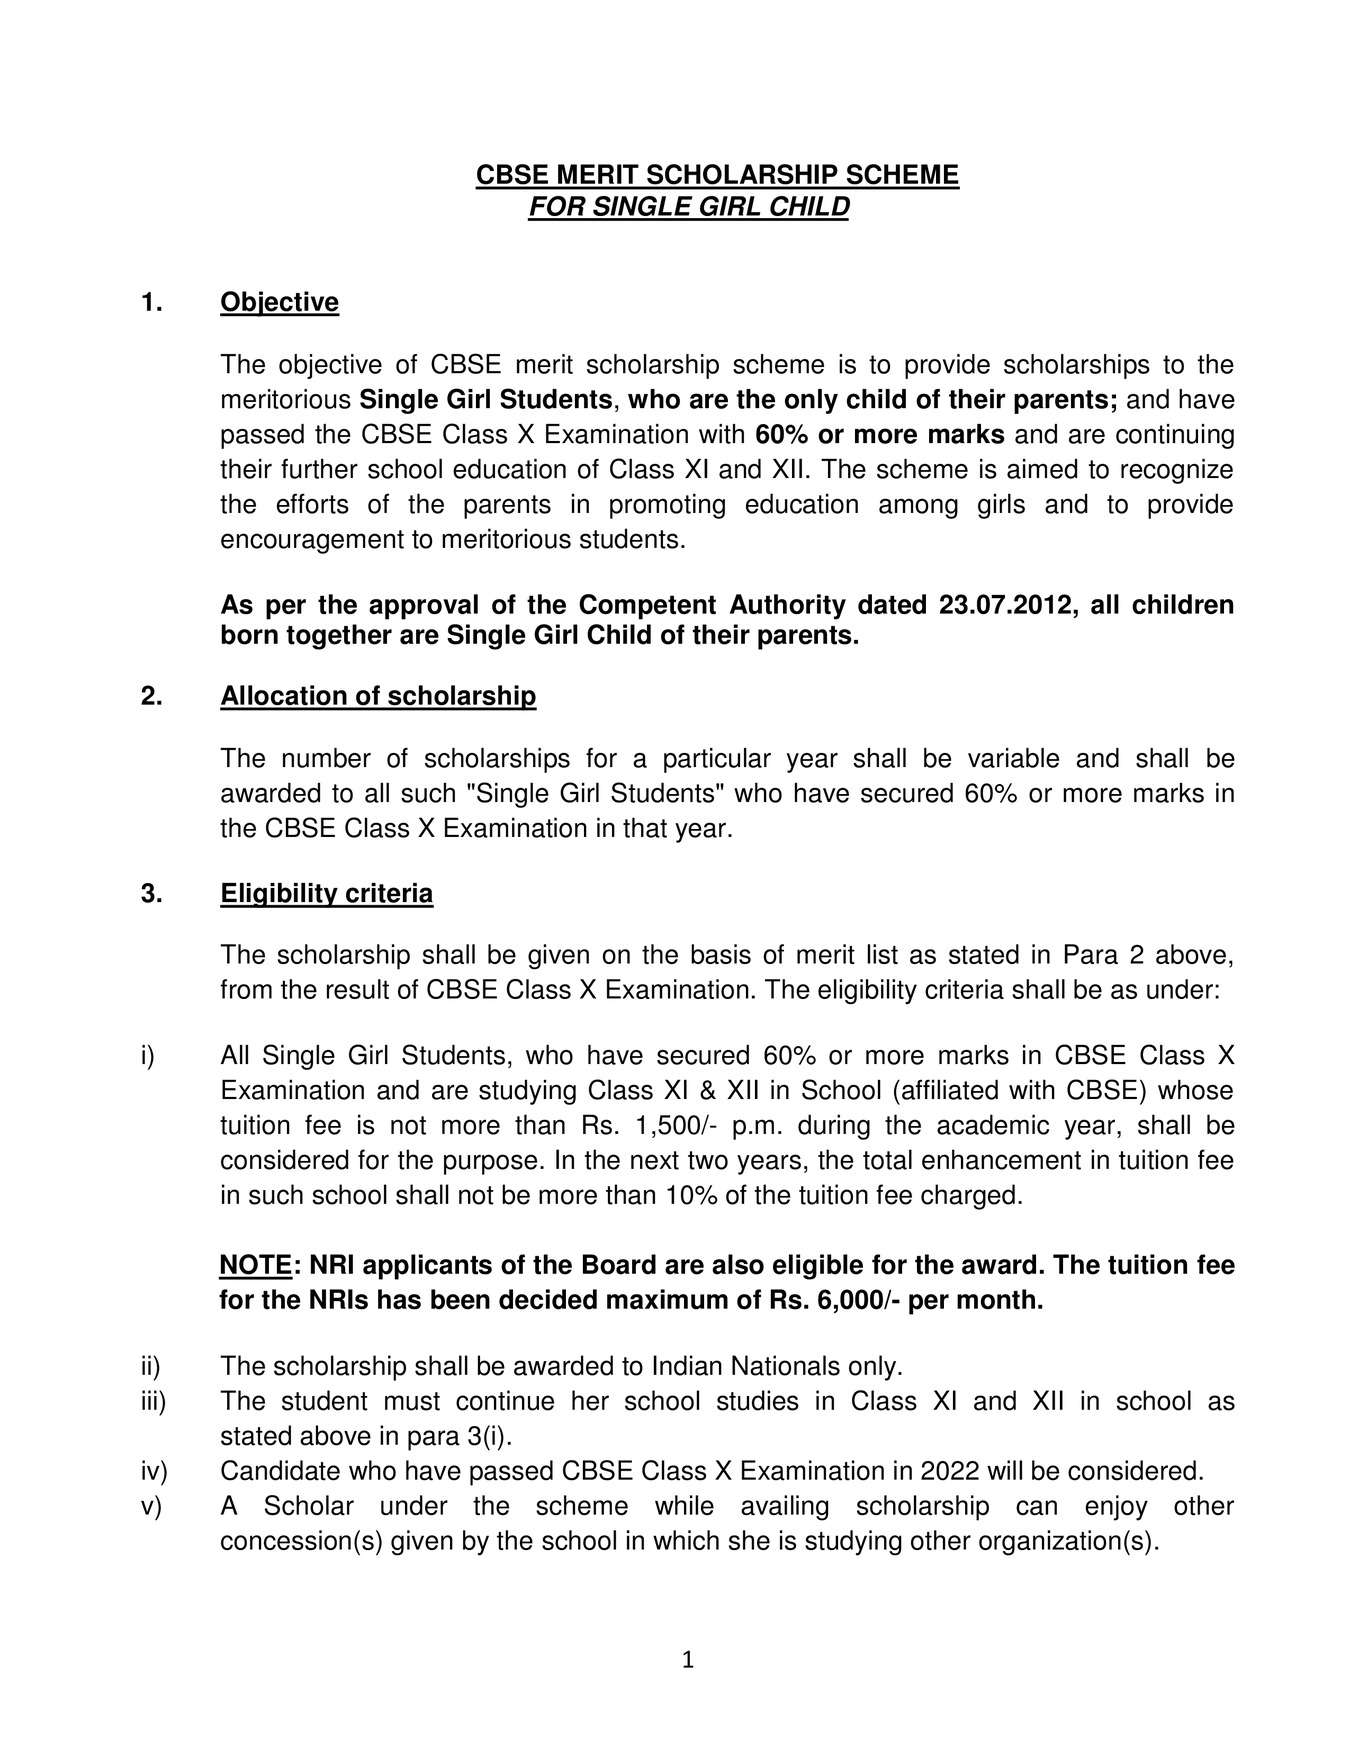 CBSE Single Girl Child Scholarship Scheme 2023 Guidelines PDF